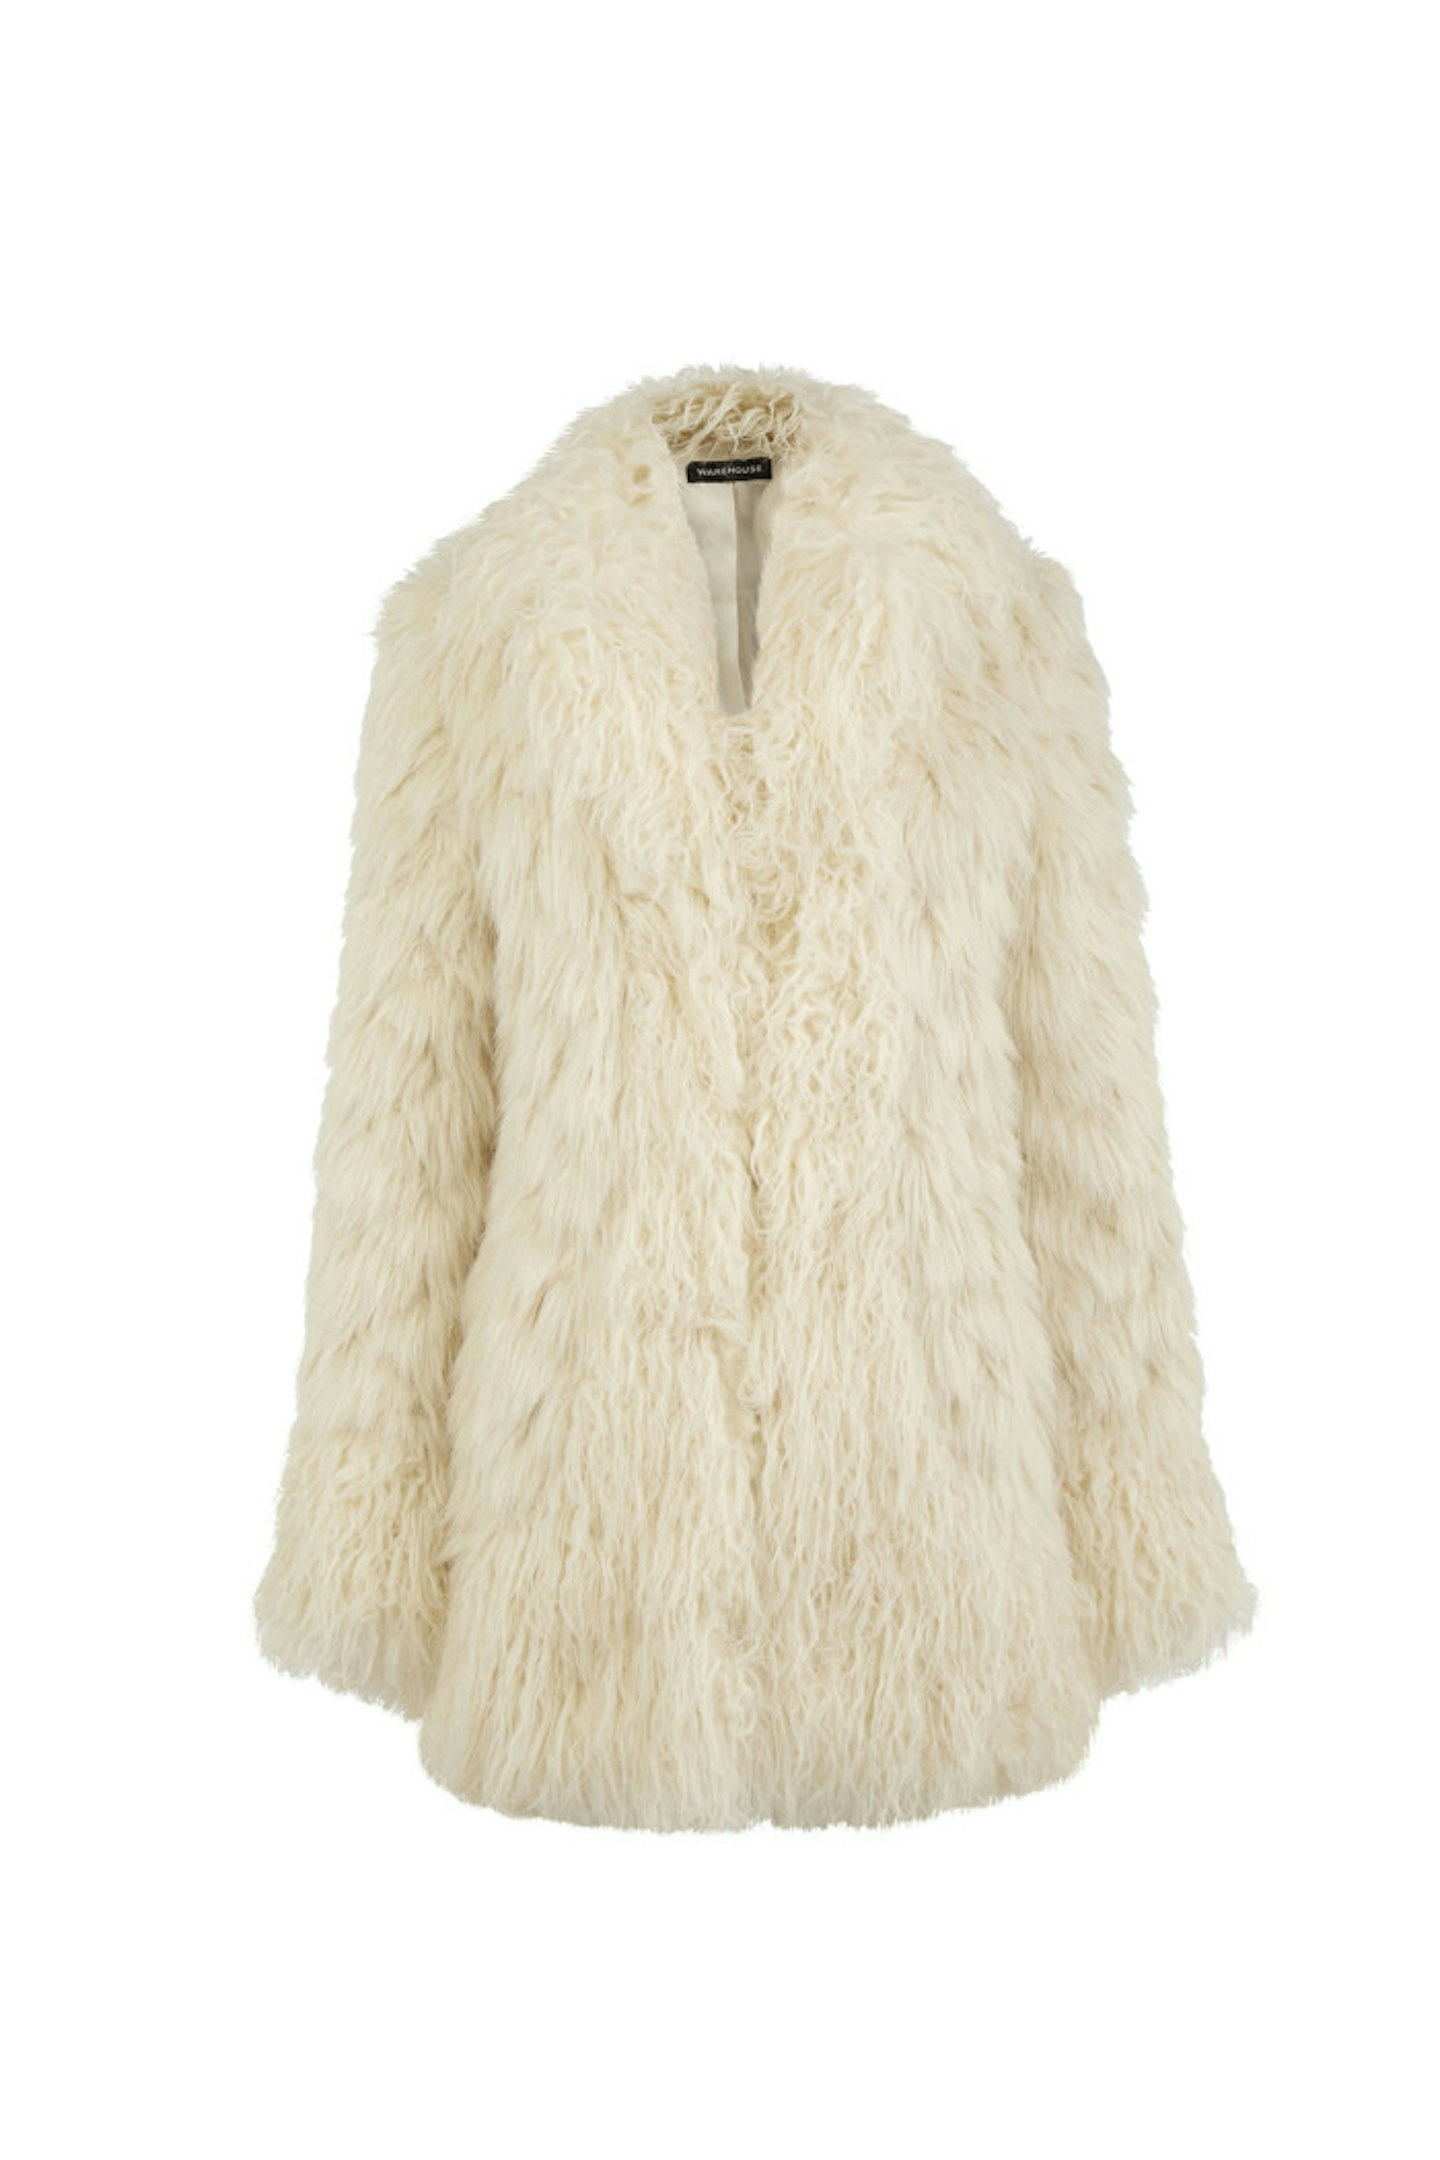 Warehouse Faux Fur Afghan Coat, £98.00